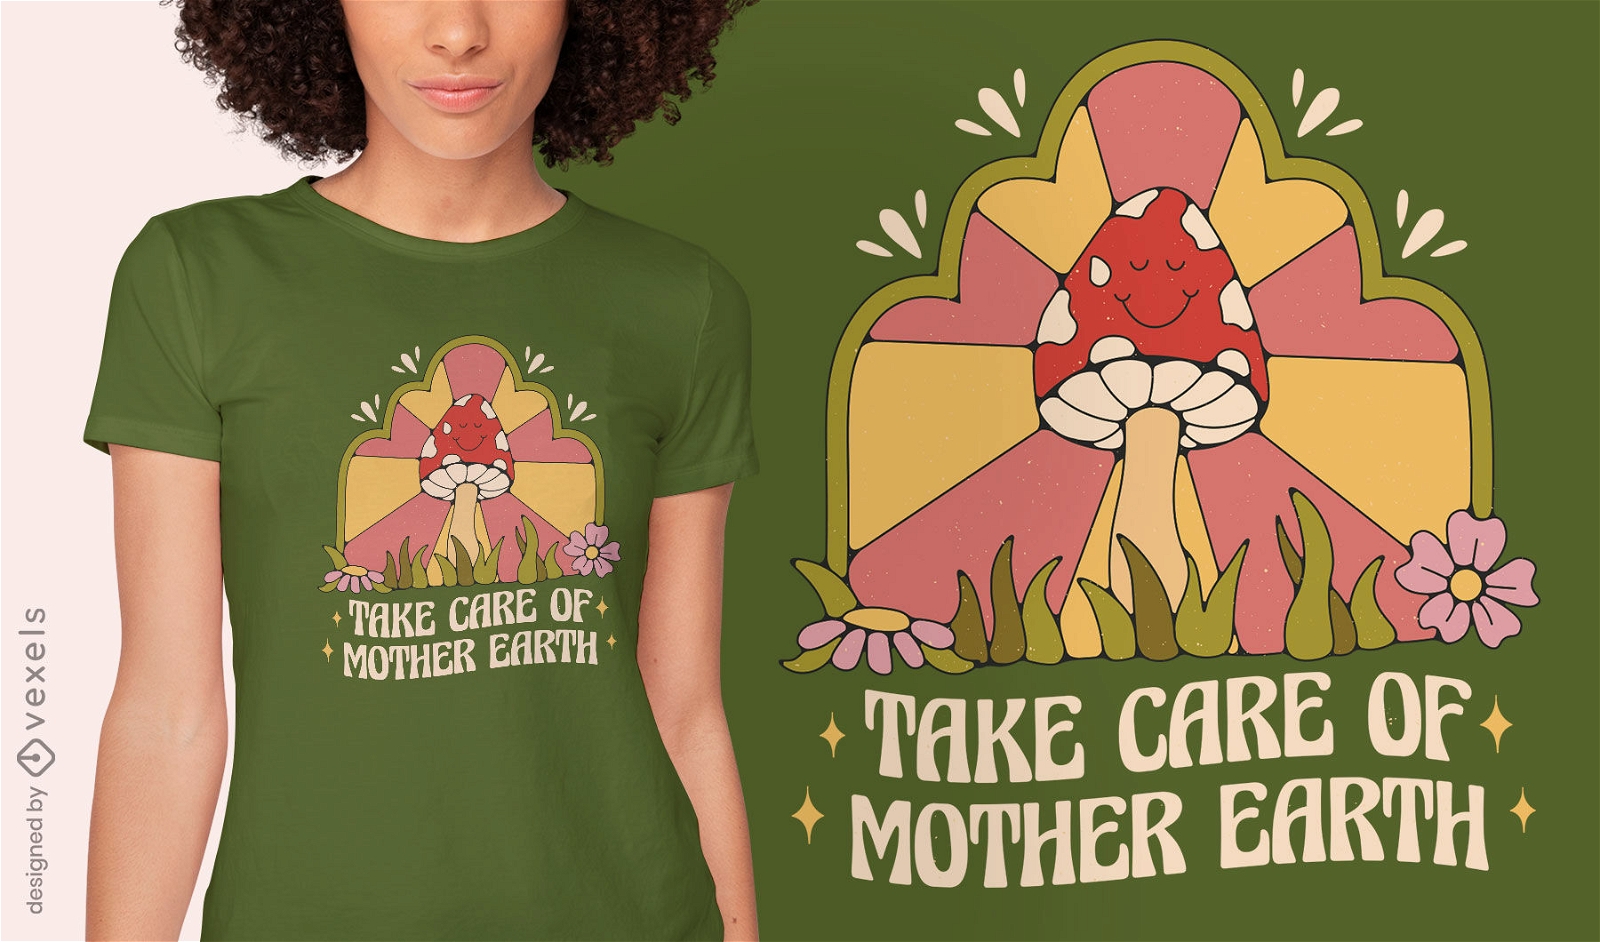 Mother earth fungi t-shirt design